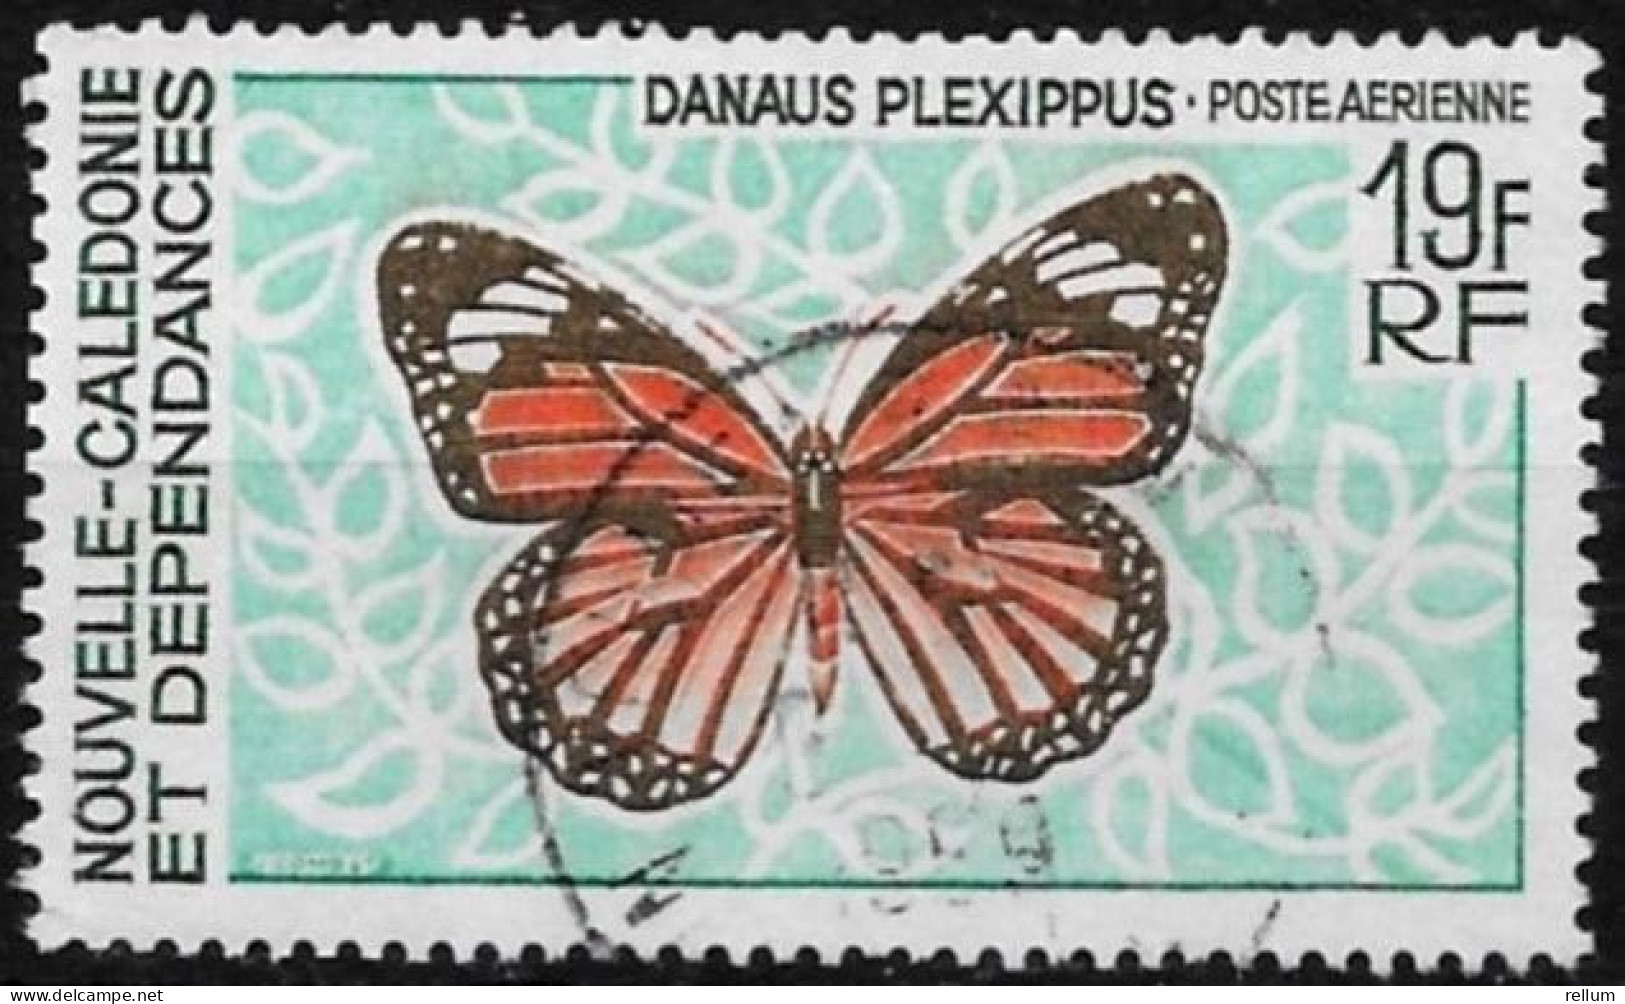 Nouvelle Calédonie 1967 - Yvert N° PA 93 - Michel N° 442 Oblitéré - Used Stamps